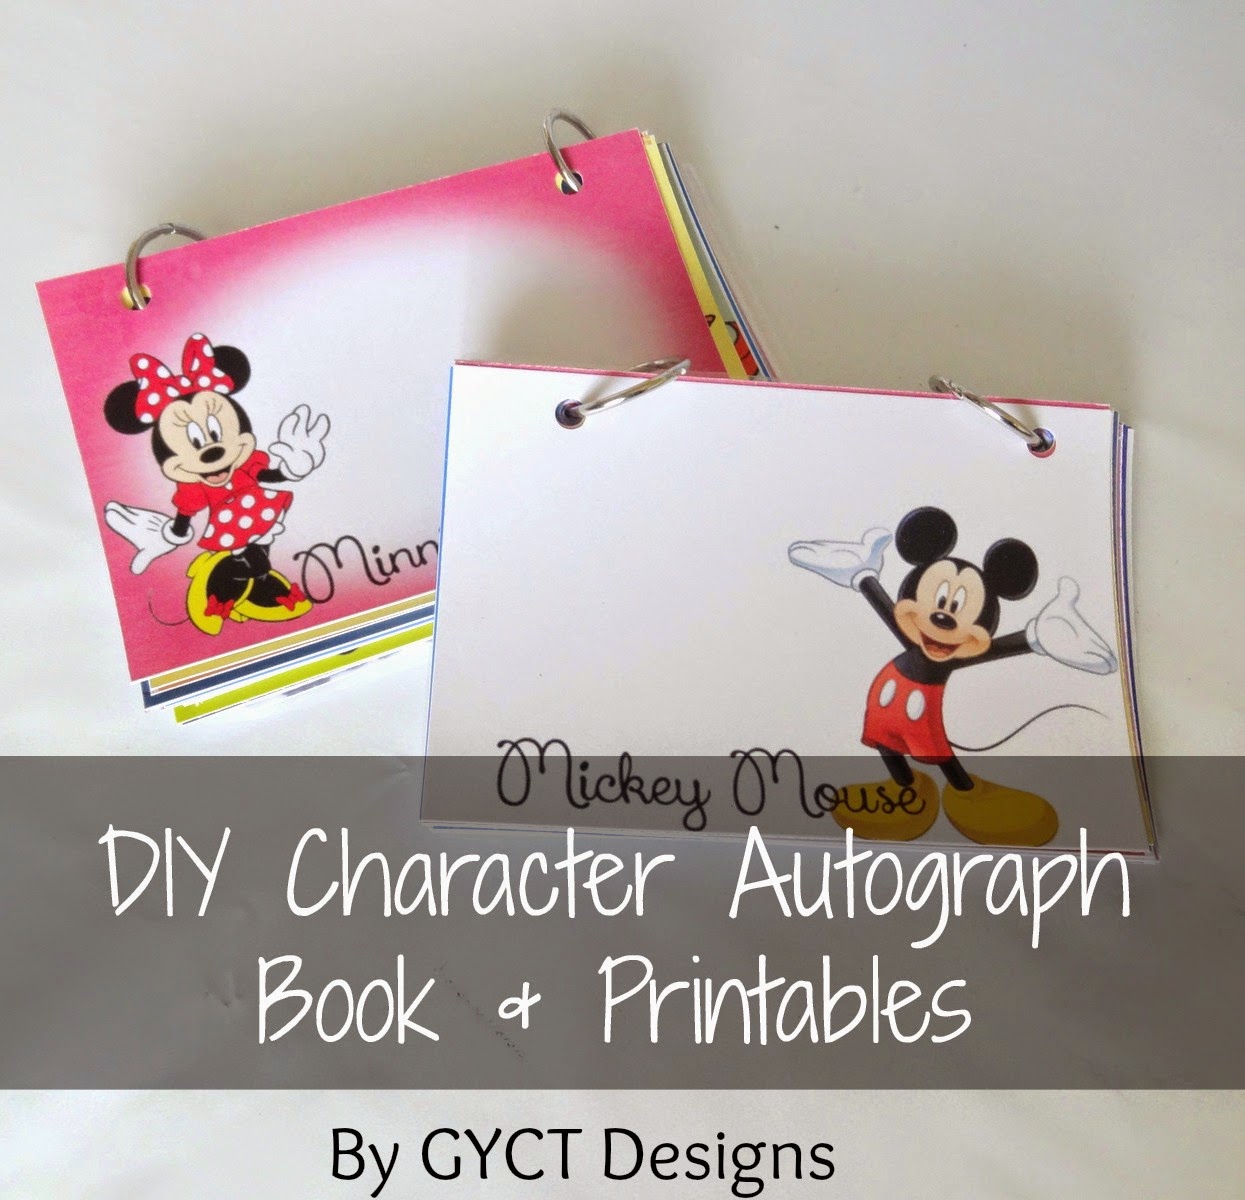 Free Printable Disney Autograph Book  Autograph book disney, Disney  autograph ideas, Disney world autograph book